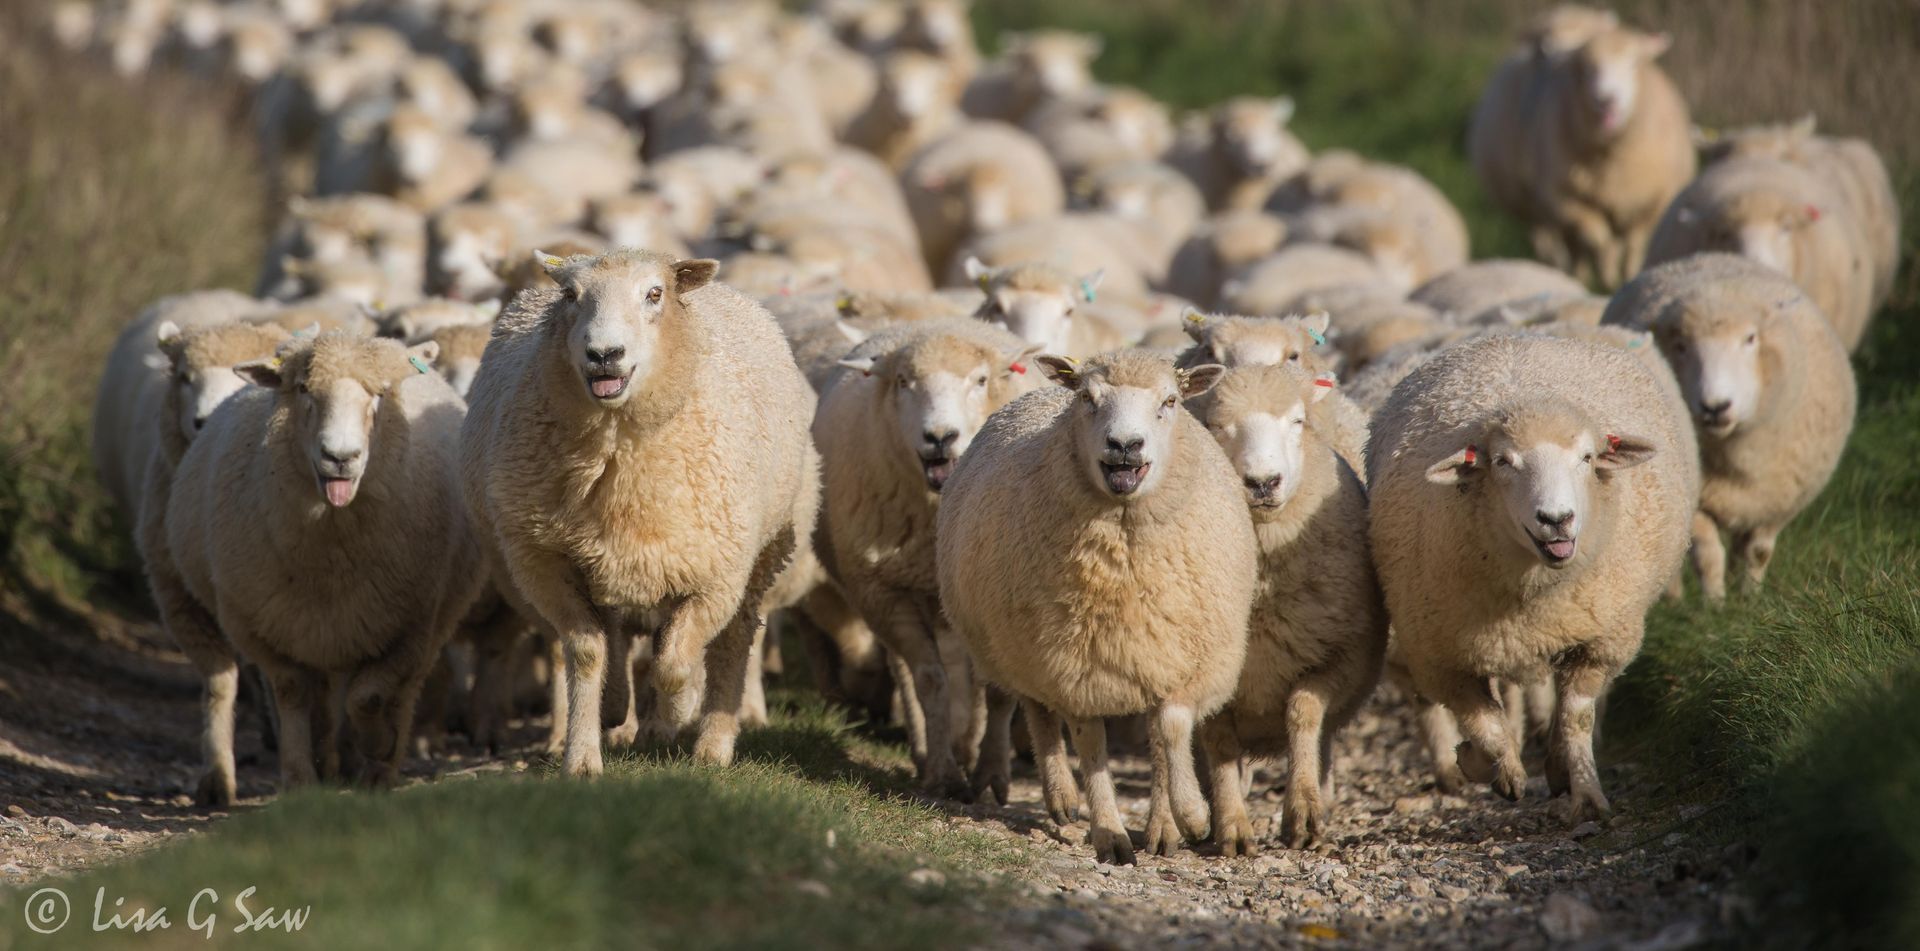 A flock of sheep running along a path, ewes